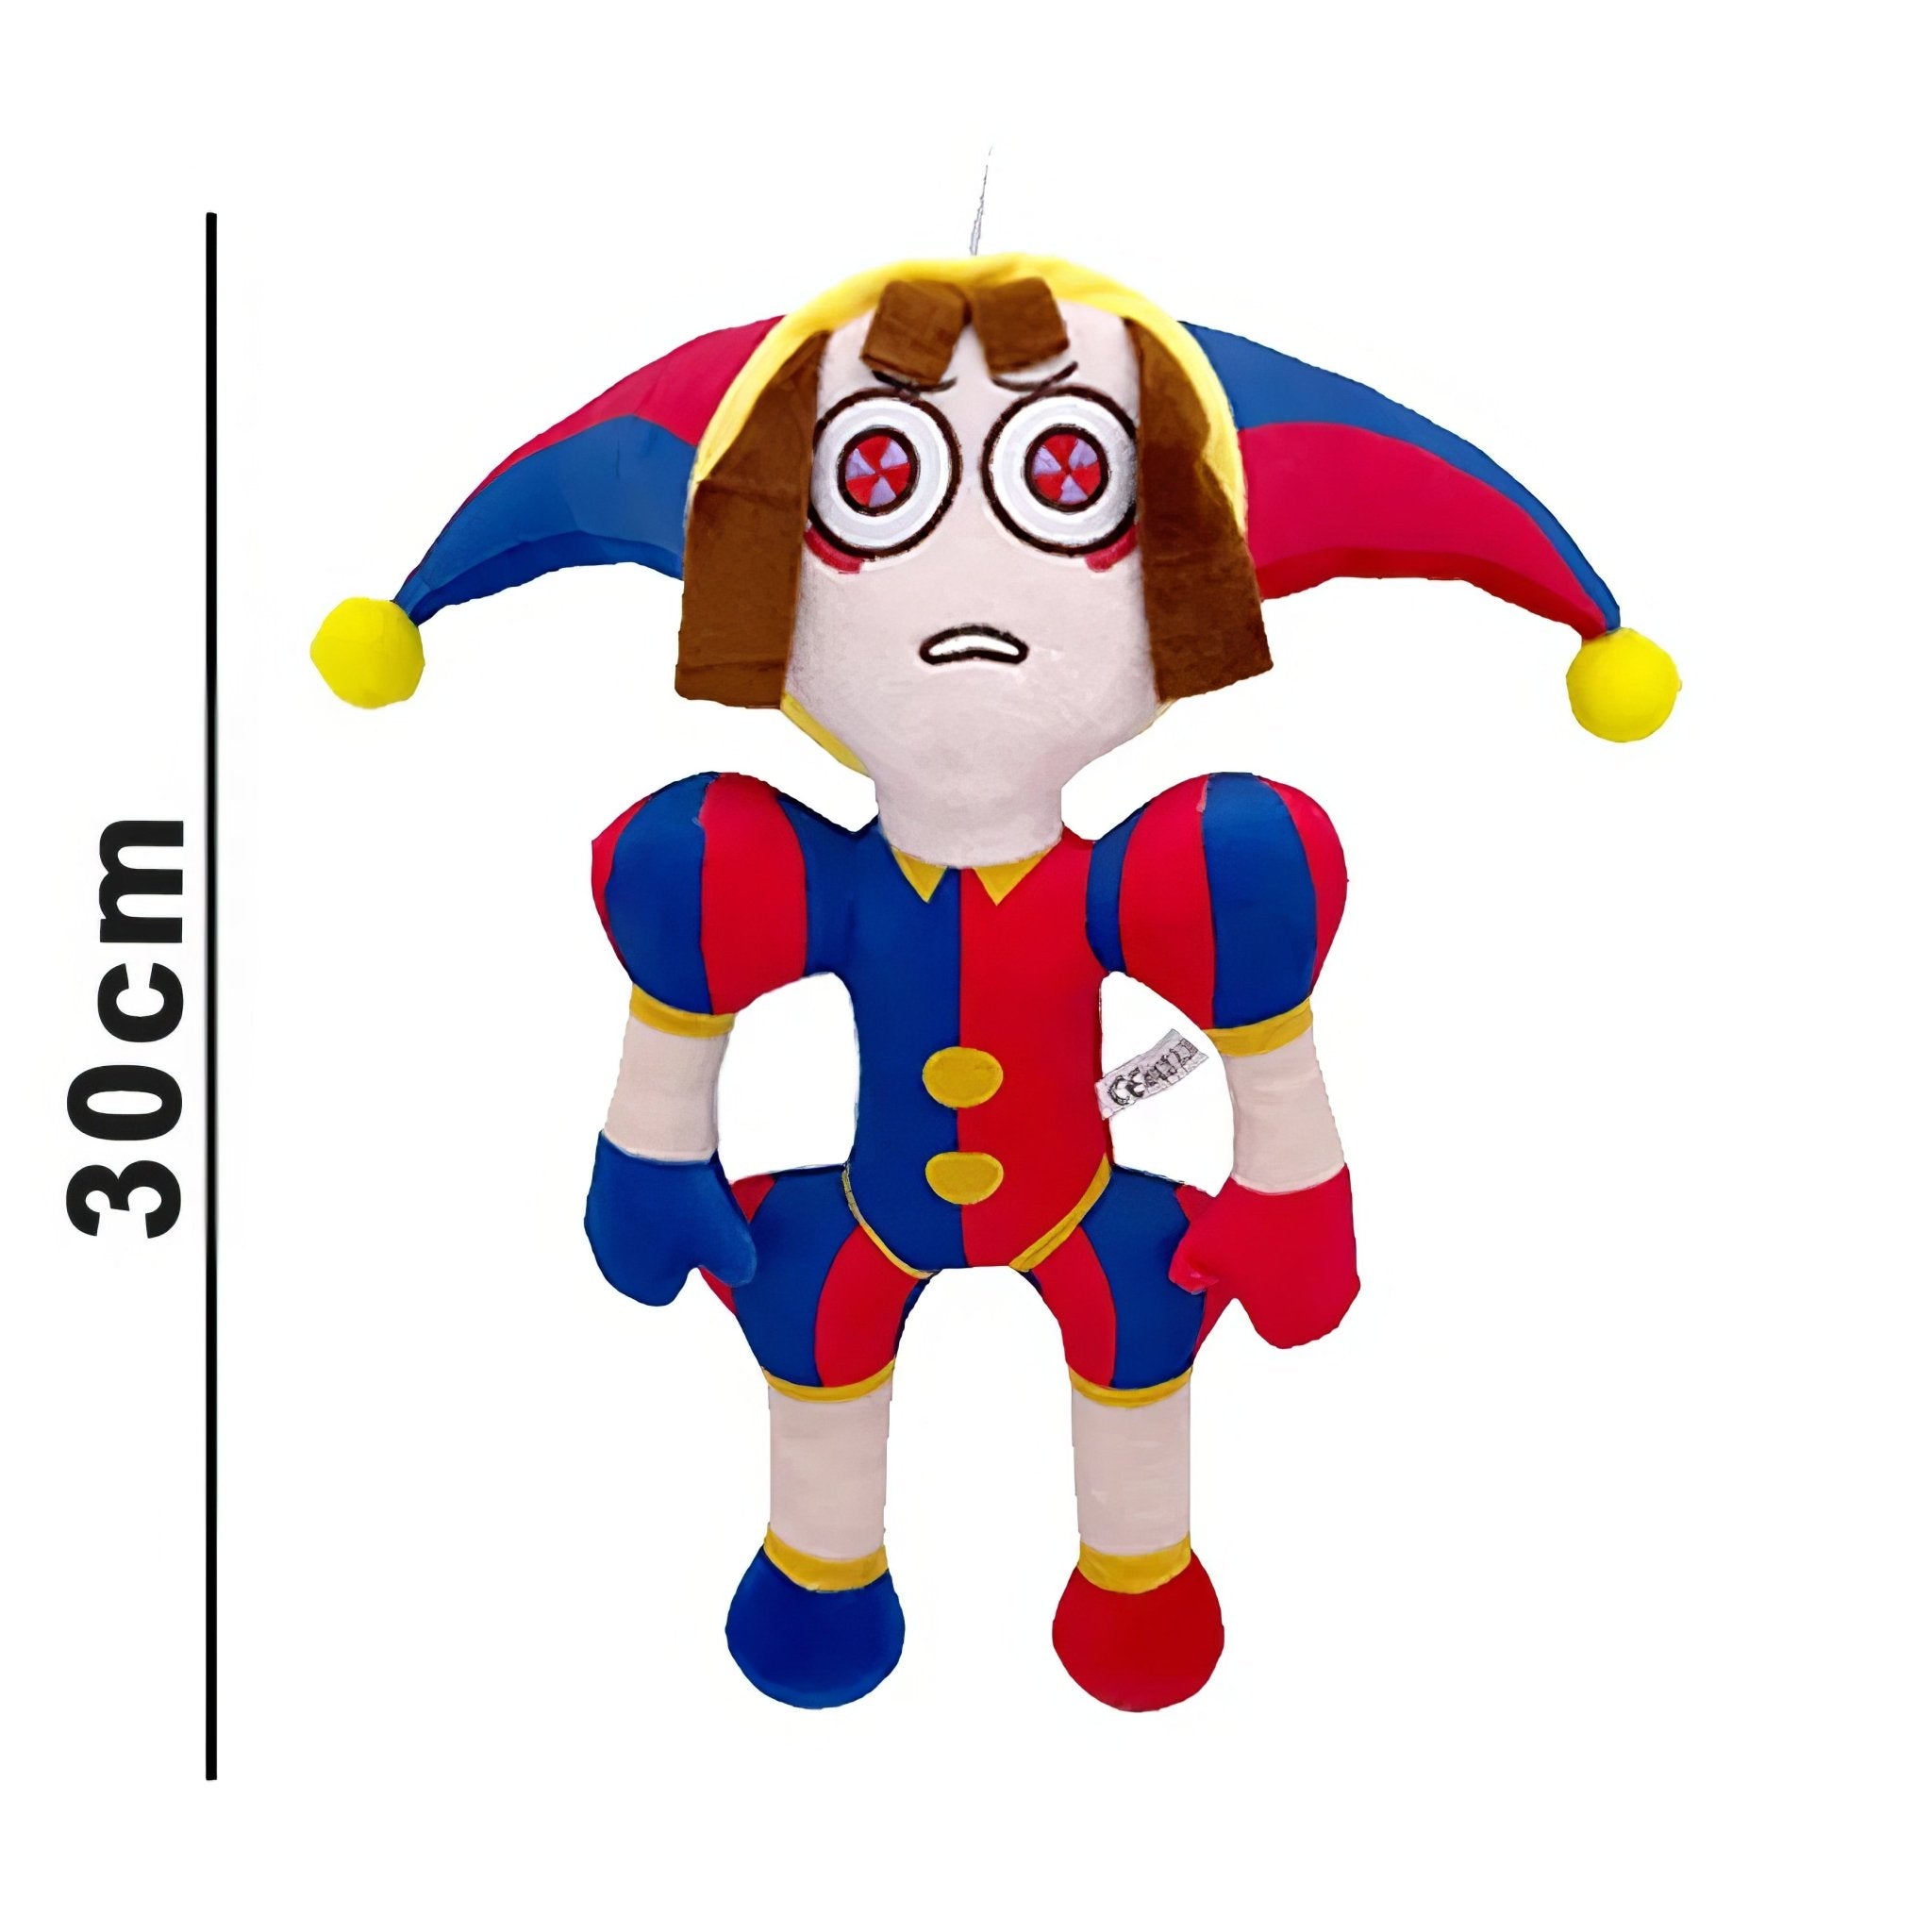 The Amazing Digital Circus Pomni Jax Plush Cartoon Plushie Toys Theater  Rabbit Doll Stuffed Toys Children Christmas Kids Gifts From Smyy5, $1.99